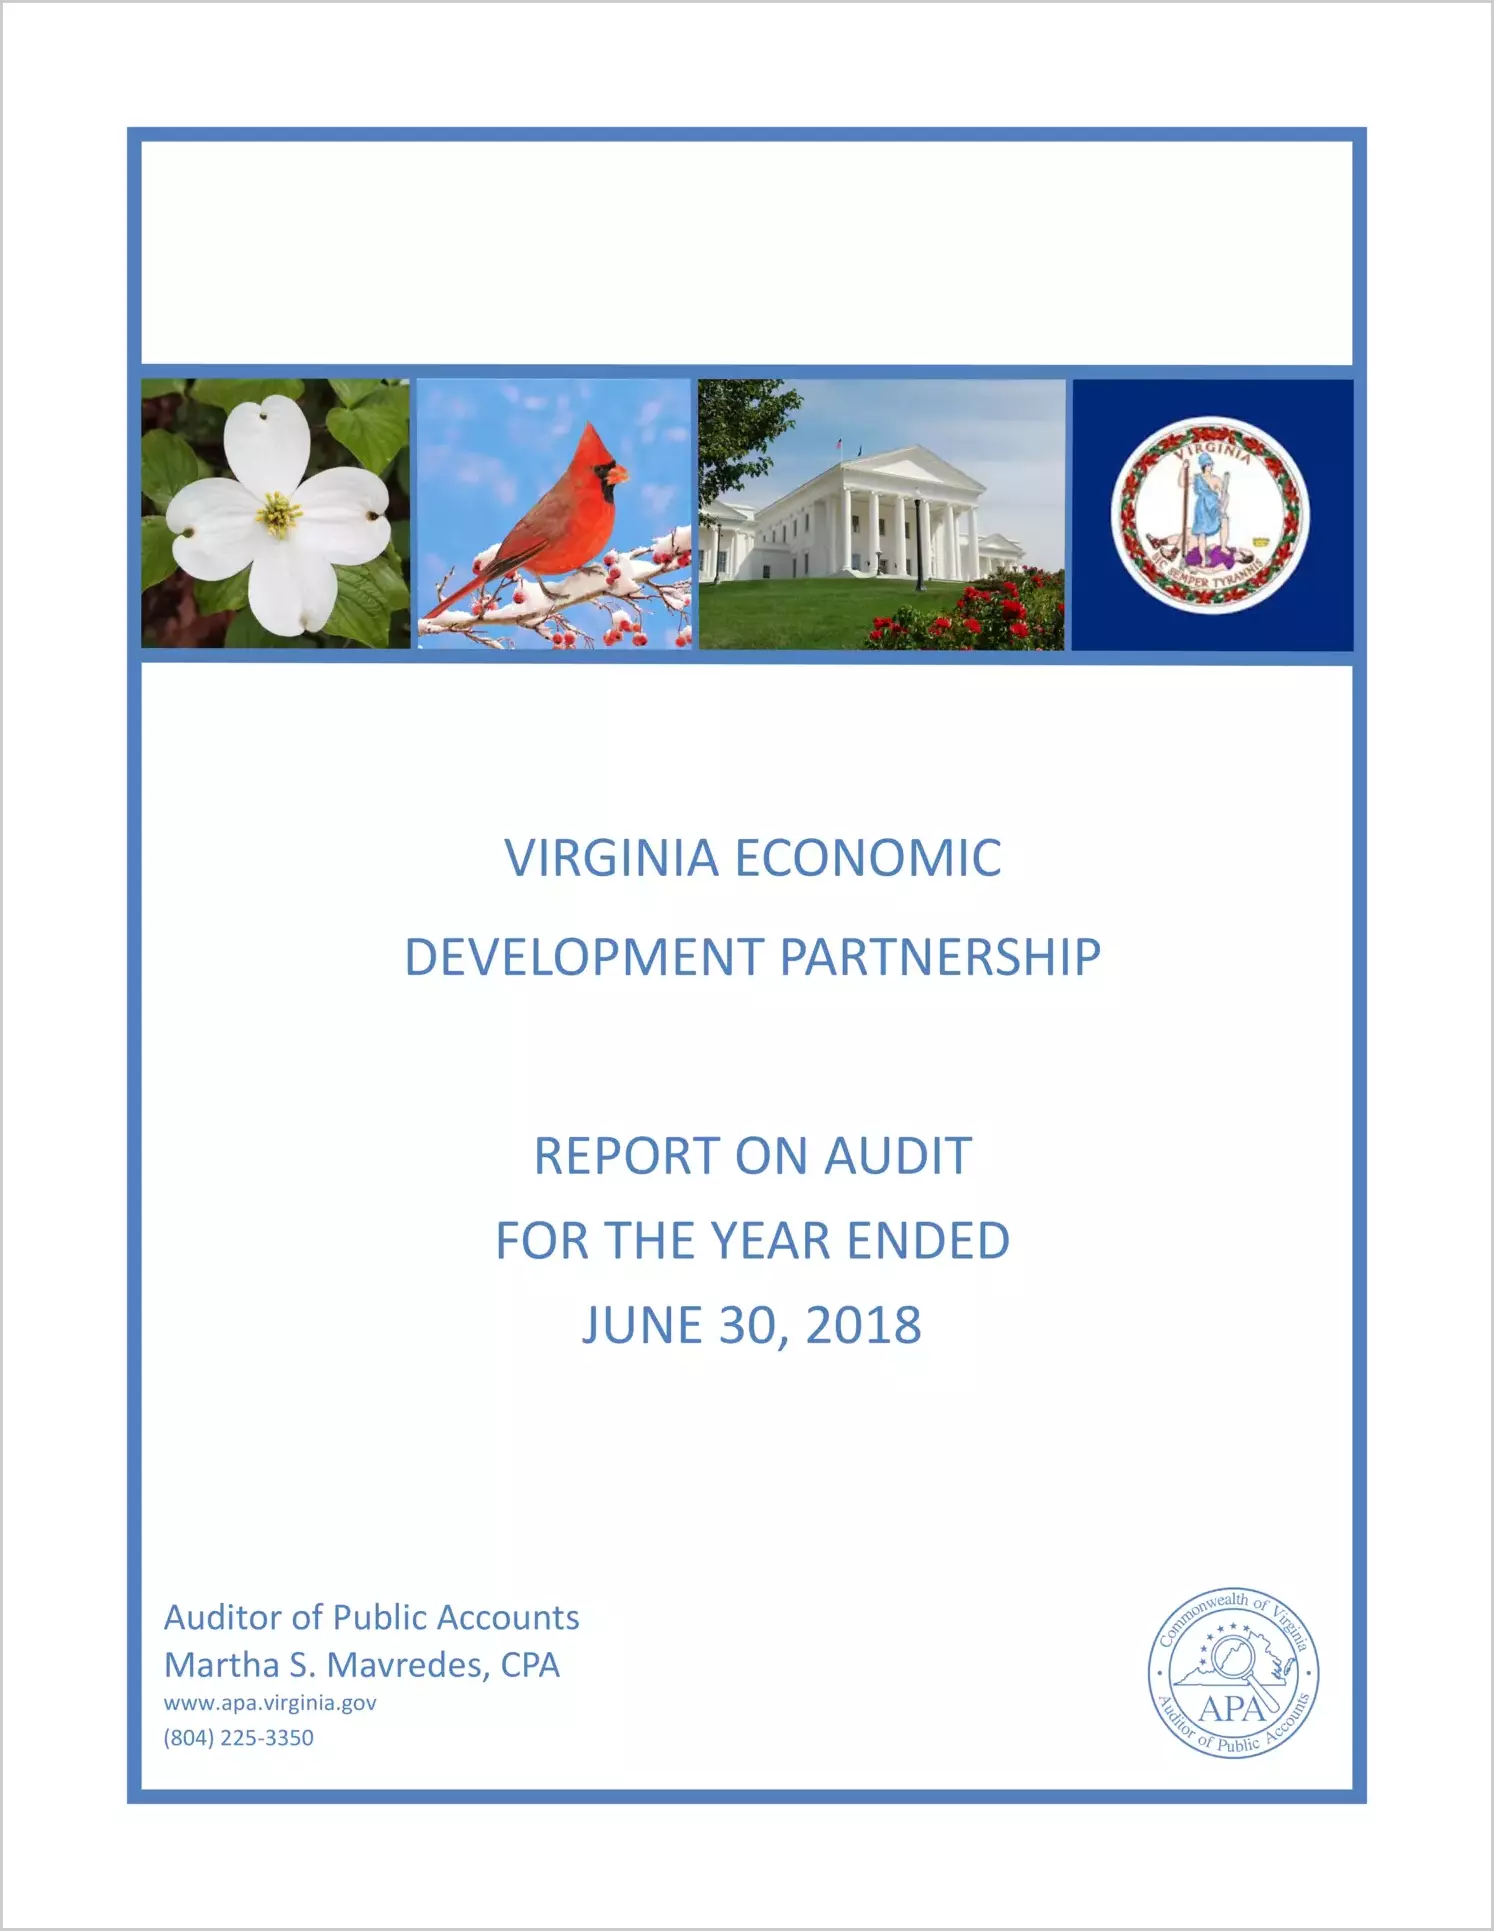 Virginia Economic Development Partnership for the year ended June 30, 2018